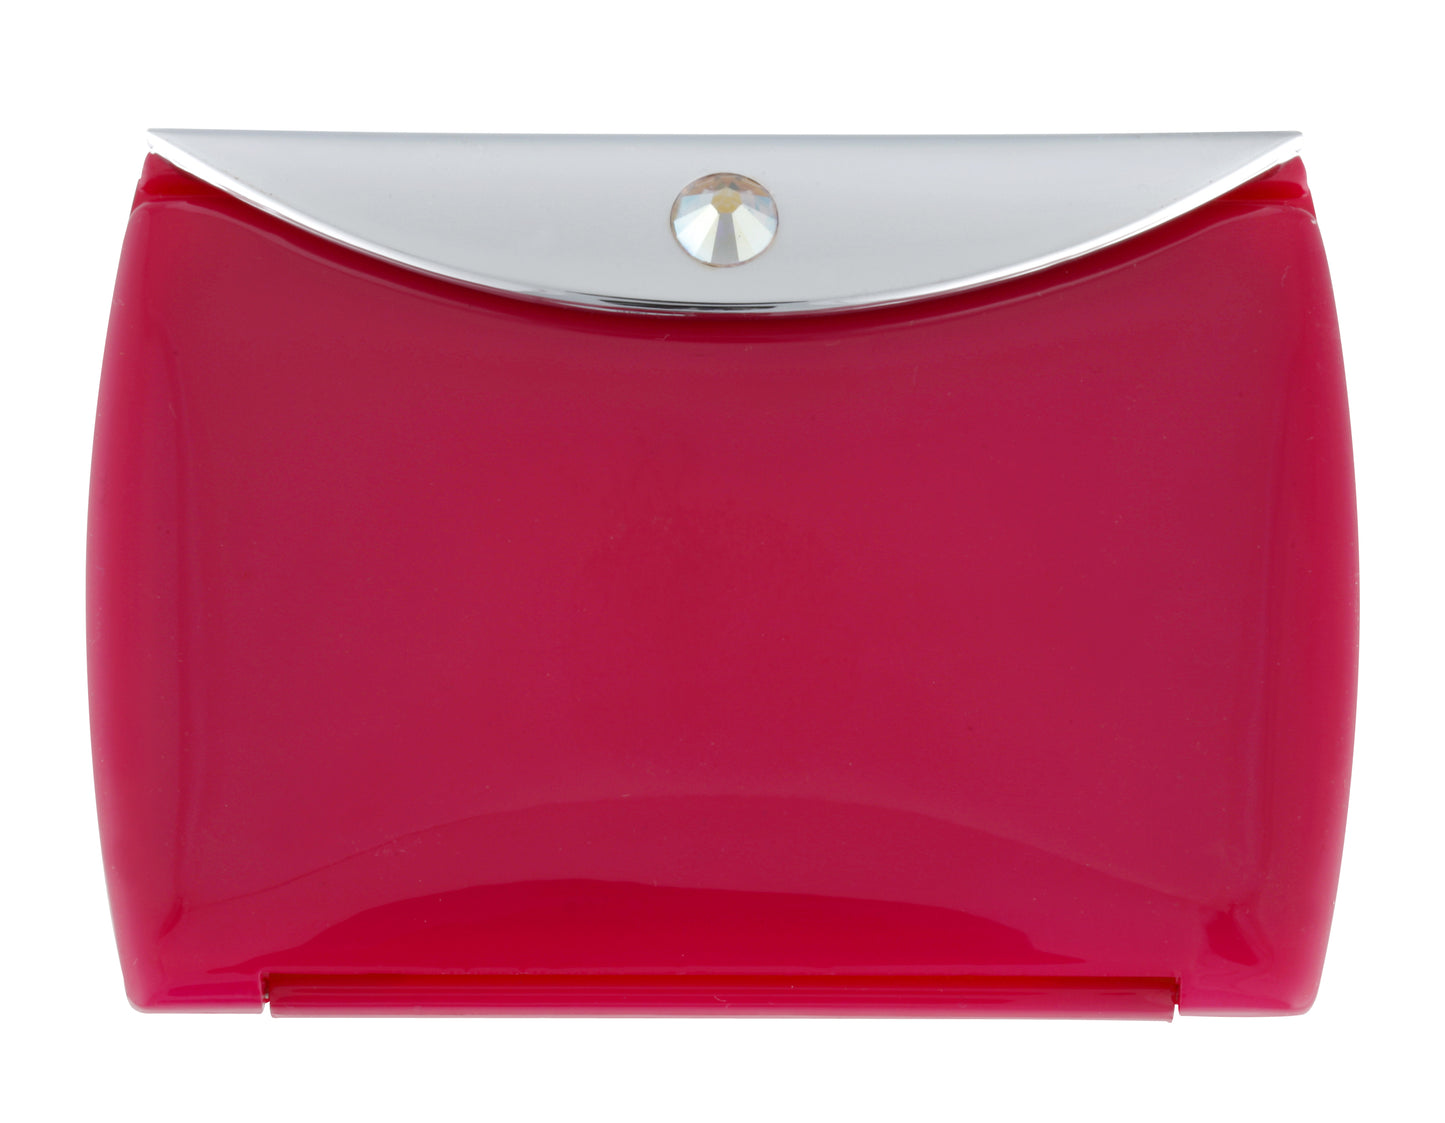 Fancy Metal Goods Pink Mirror Compact Envelope 3x Mag with Swarovski Crystal